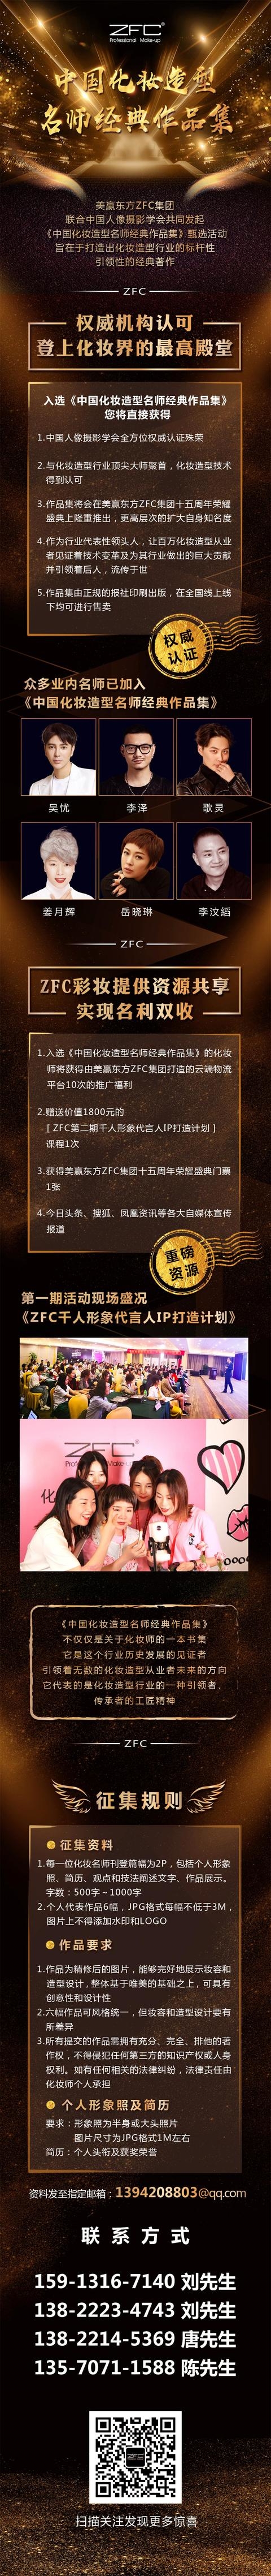 ZFC联合人像摄影学会 《化妆造型名师经典作品集》甄选